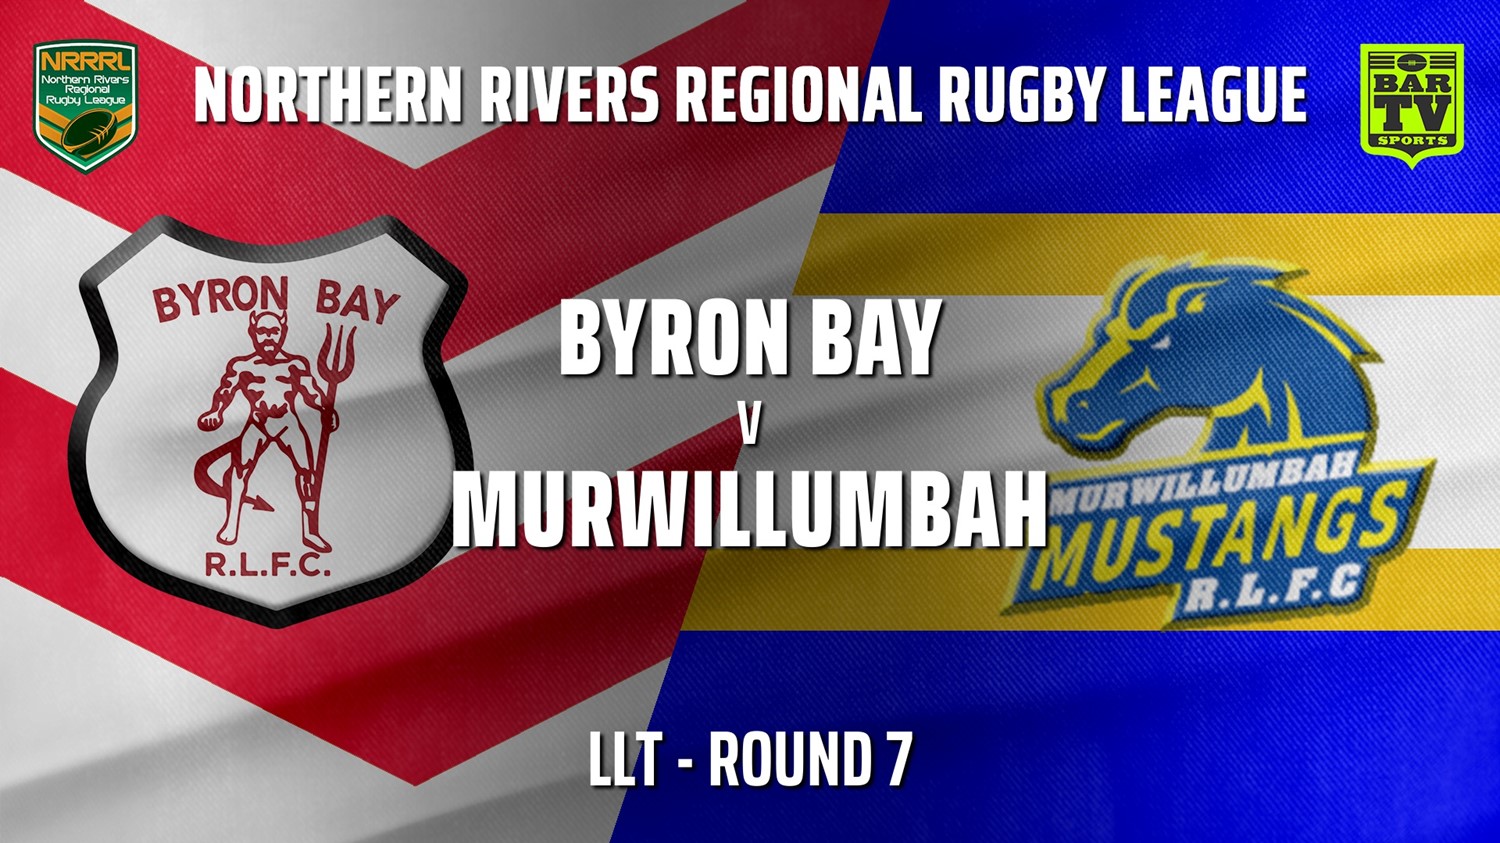 210620-Northern Rivers Round 7 - u18s - Byron Bay Red Devils v Murwillumbah Mustangs Slate Image